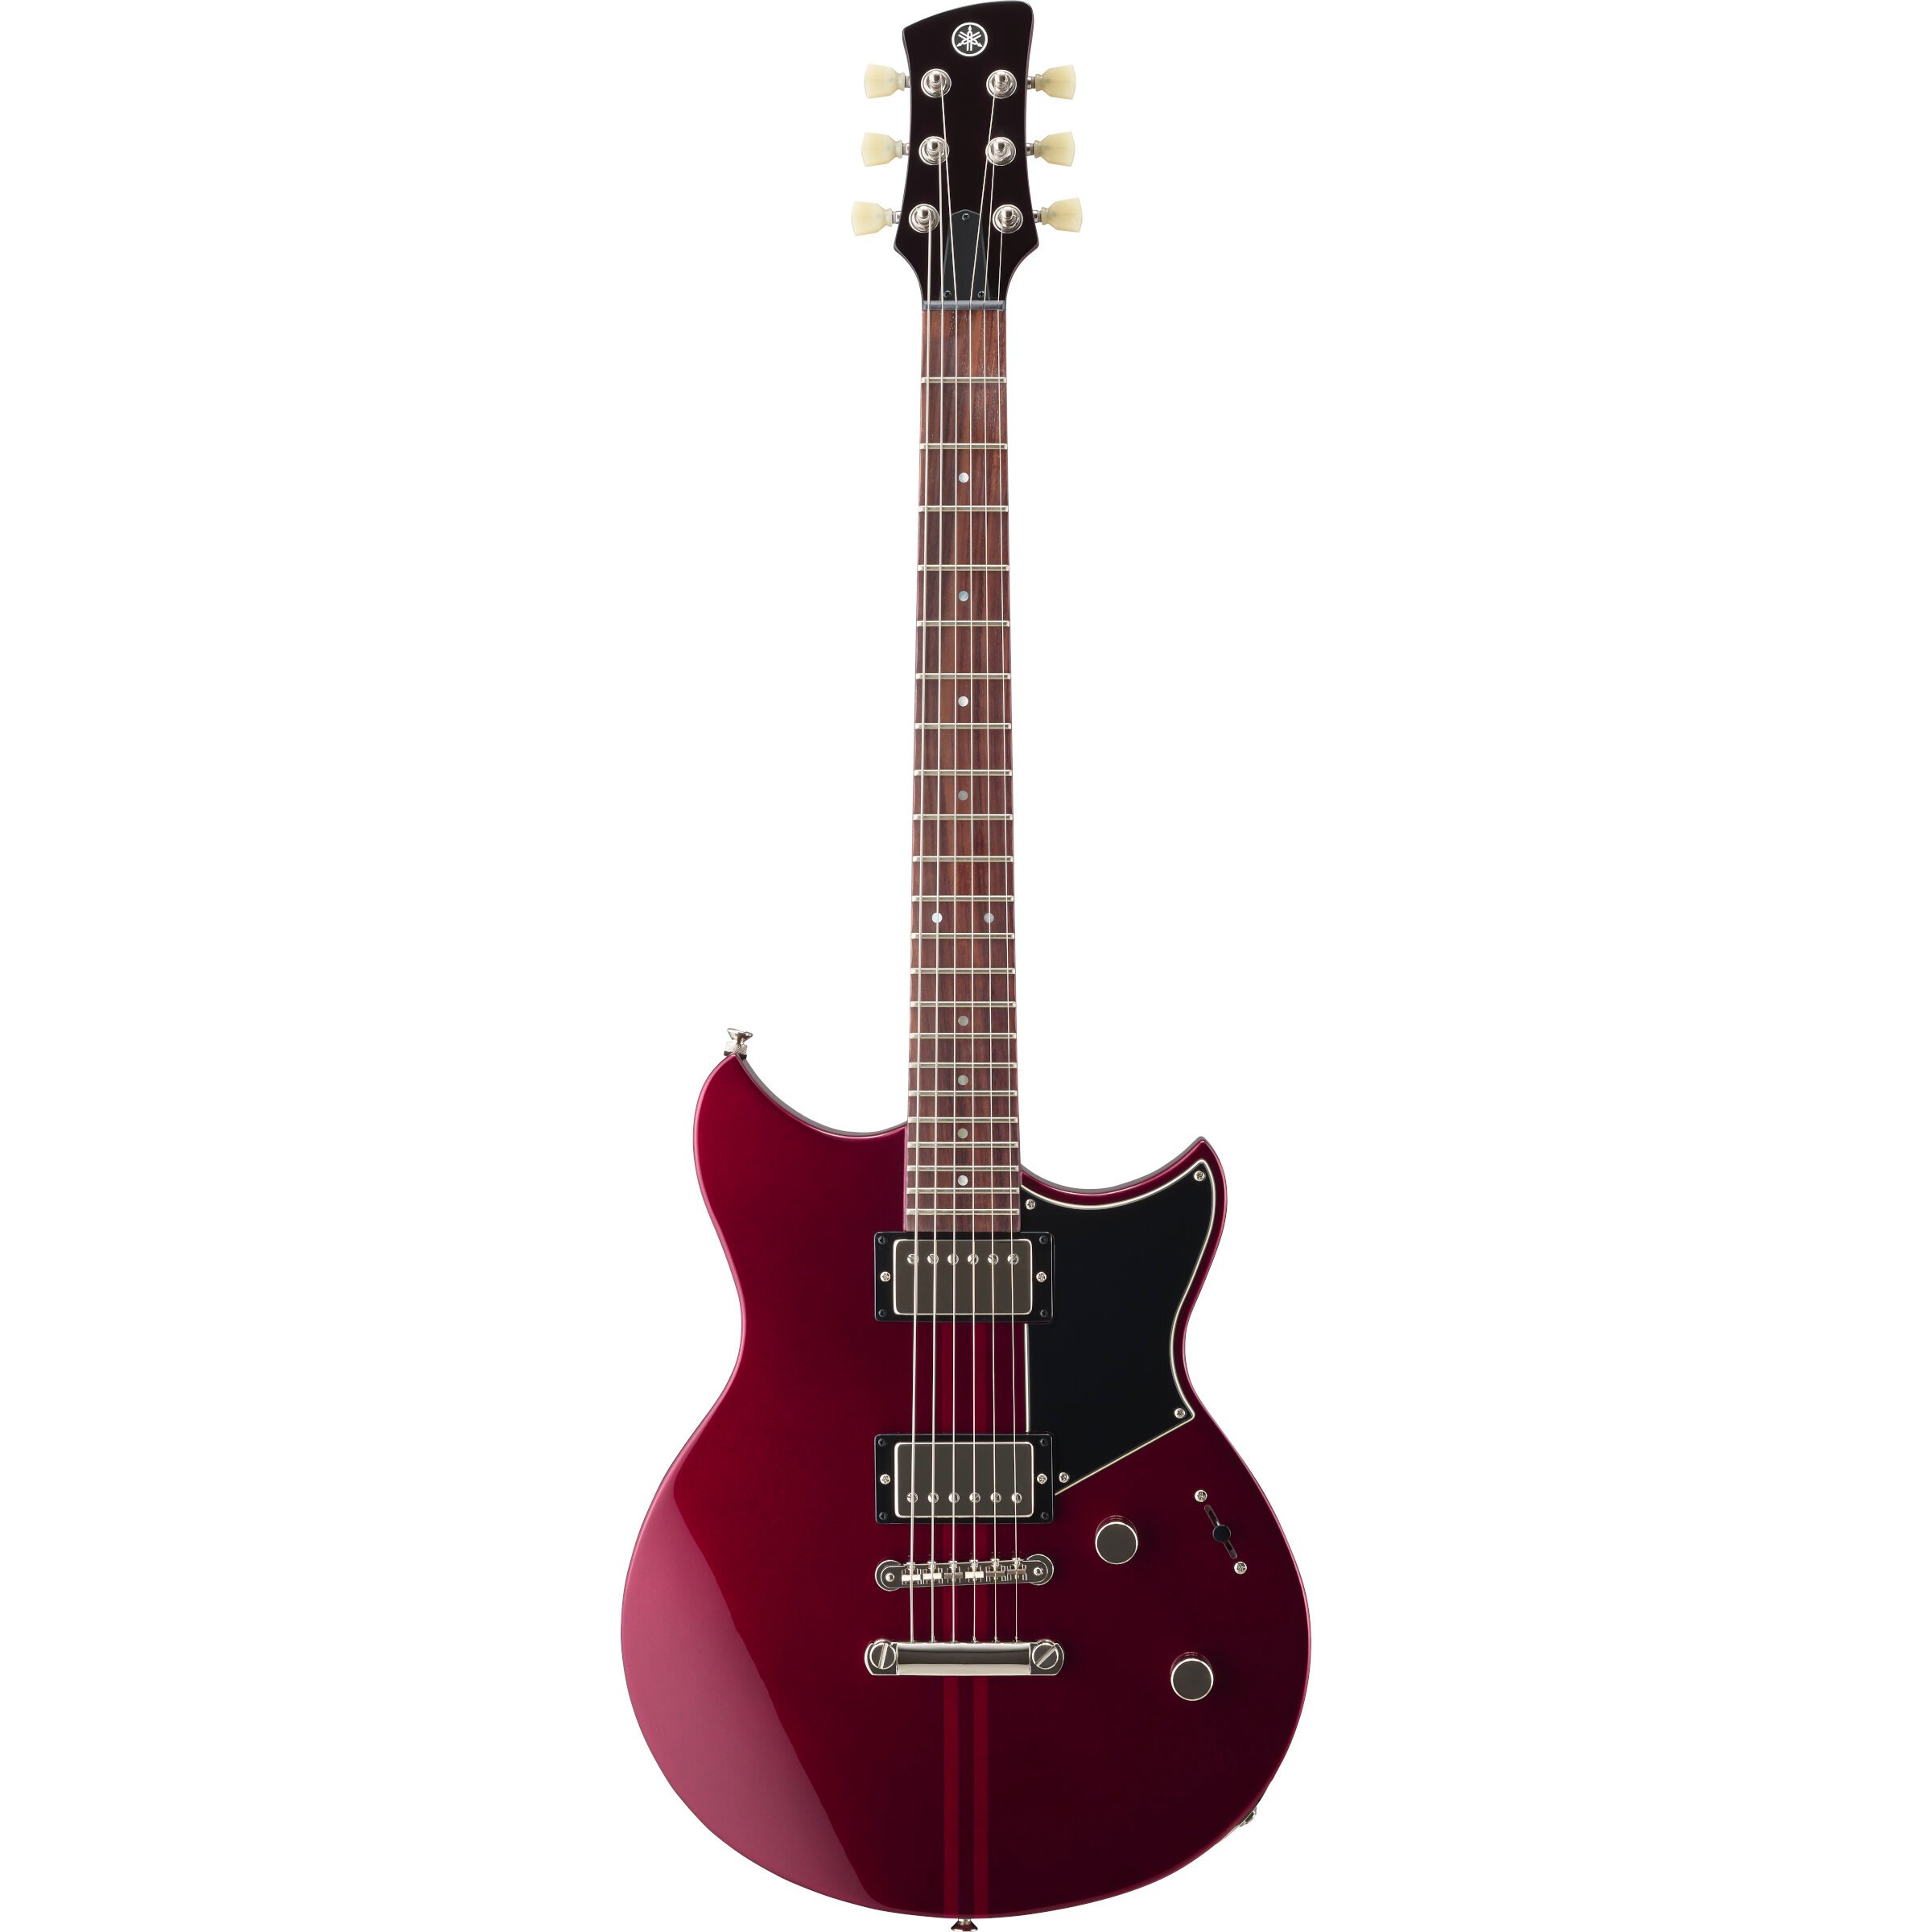 Yamaha Revstar Element RSE20 Red Copper elektrische gitaar